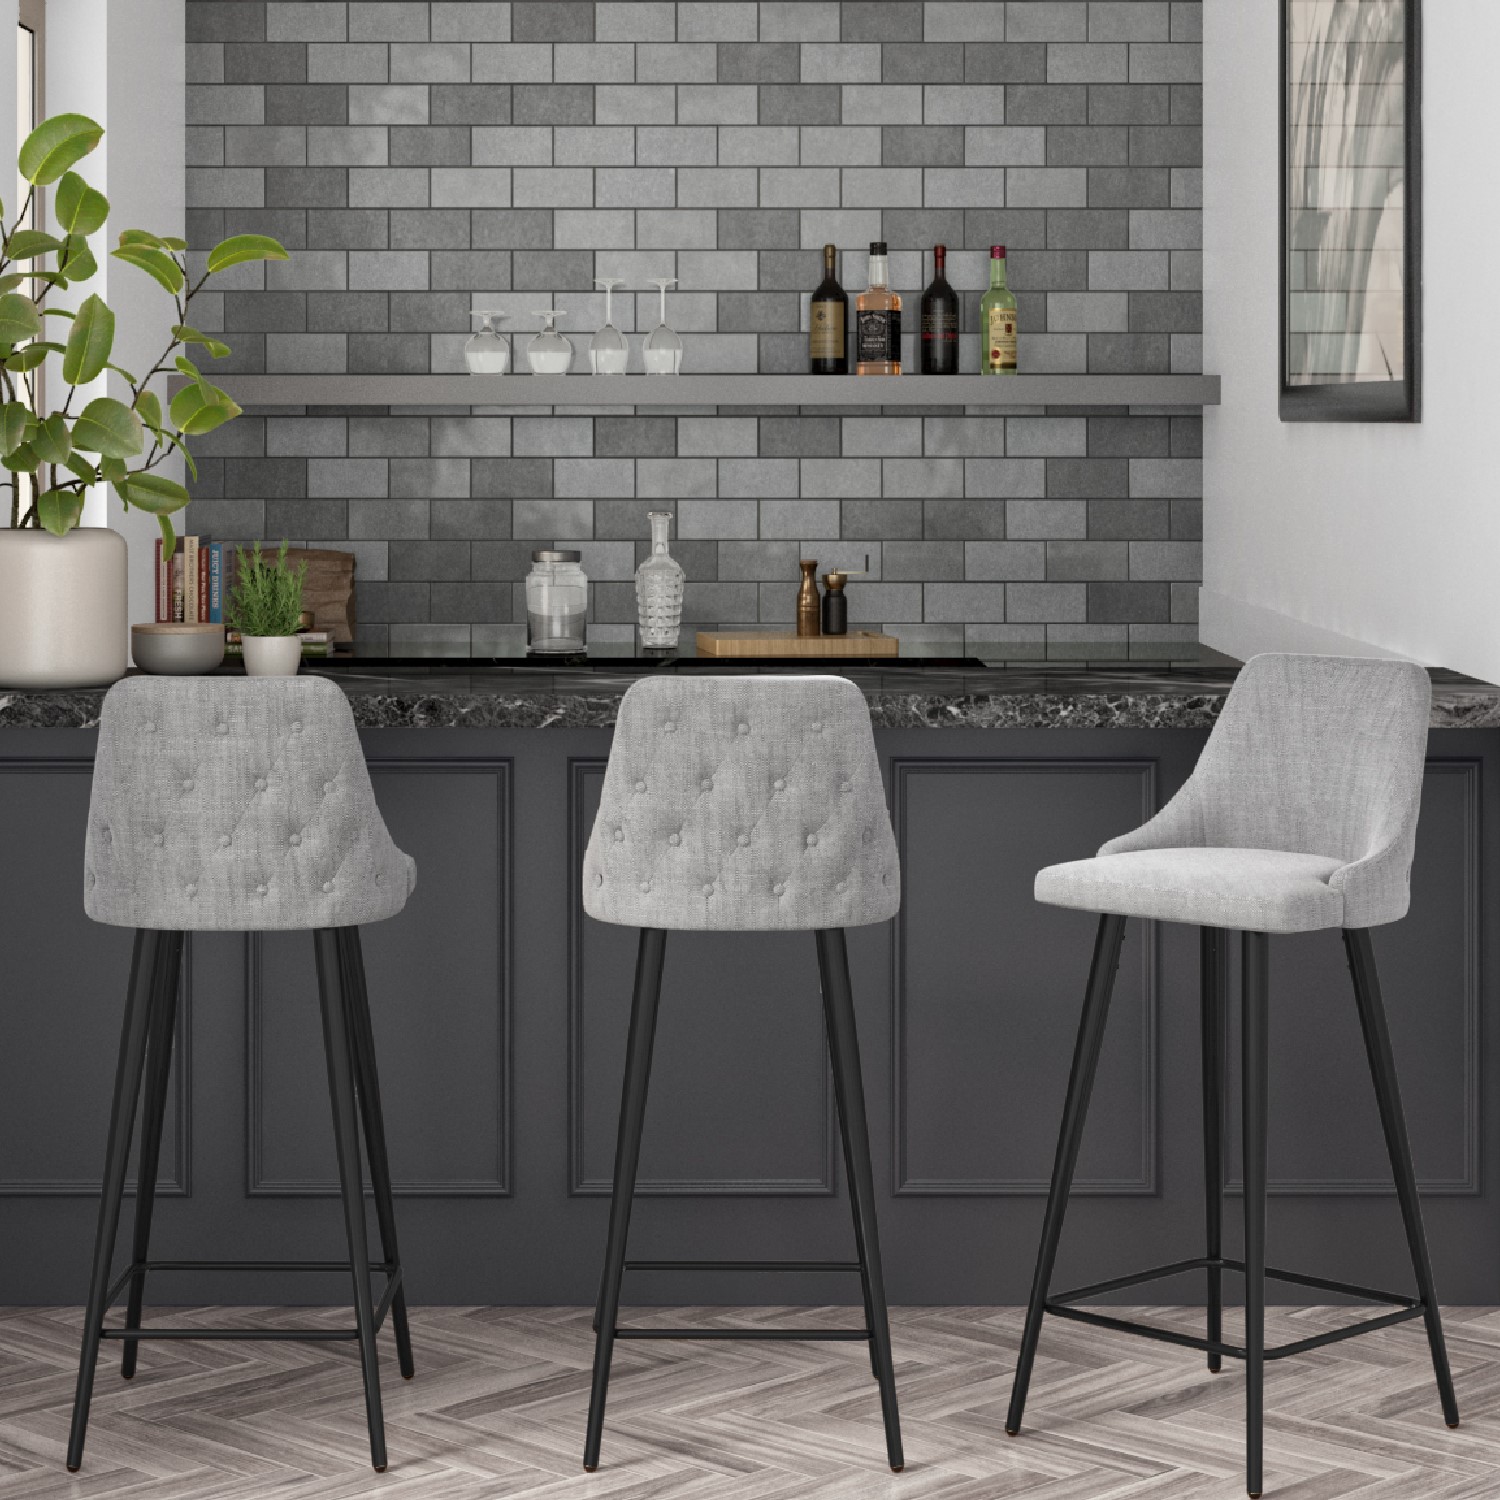 Photo of Set of 3 grey fabric bar stools with backs - maddy